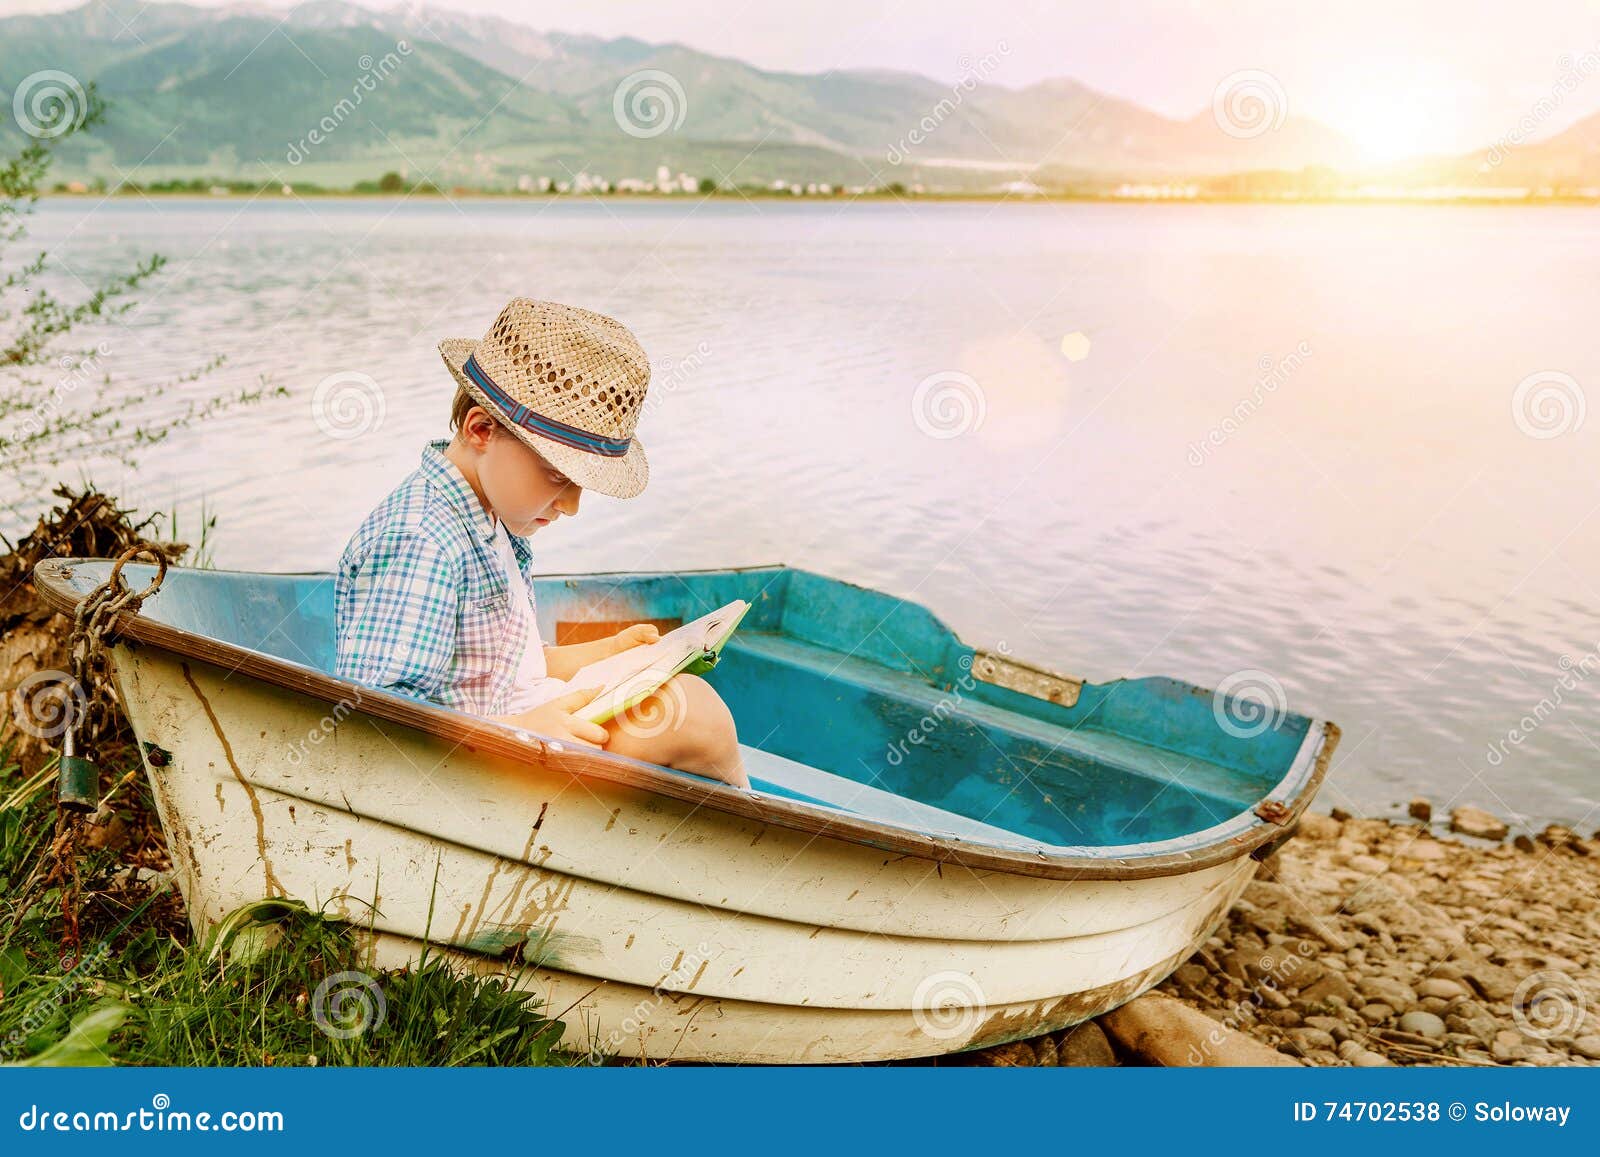 2,345 Boat Fishing Seats Royalty-Free Images, Stock Photos